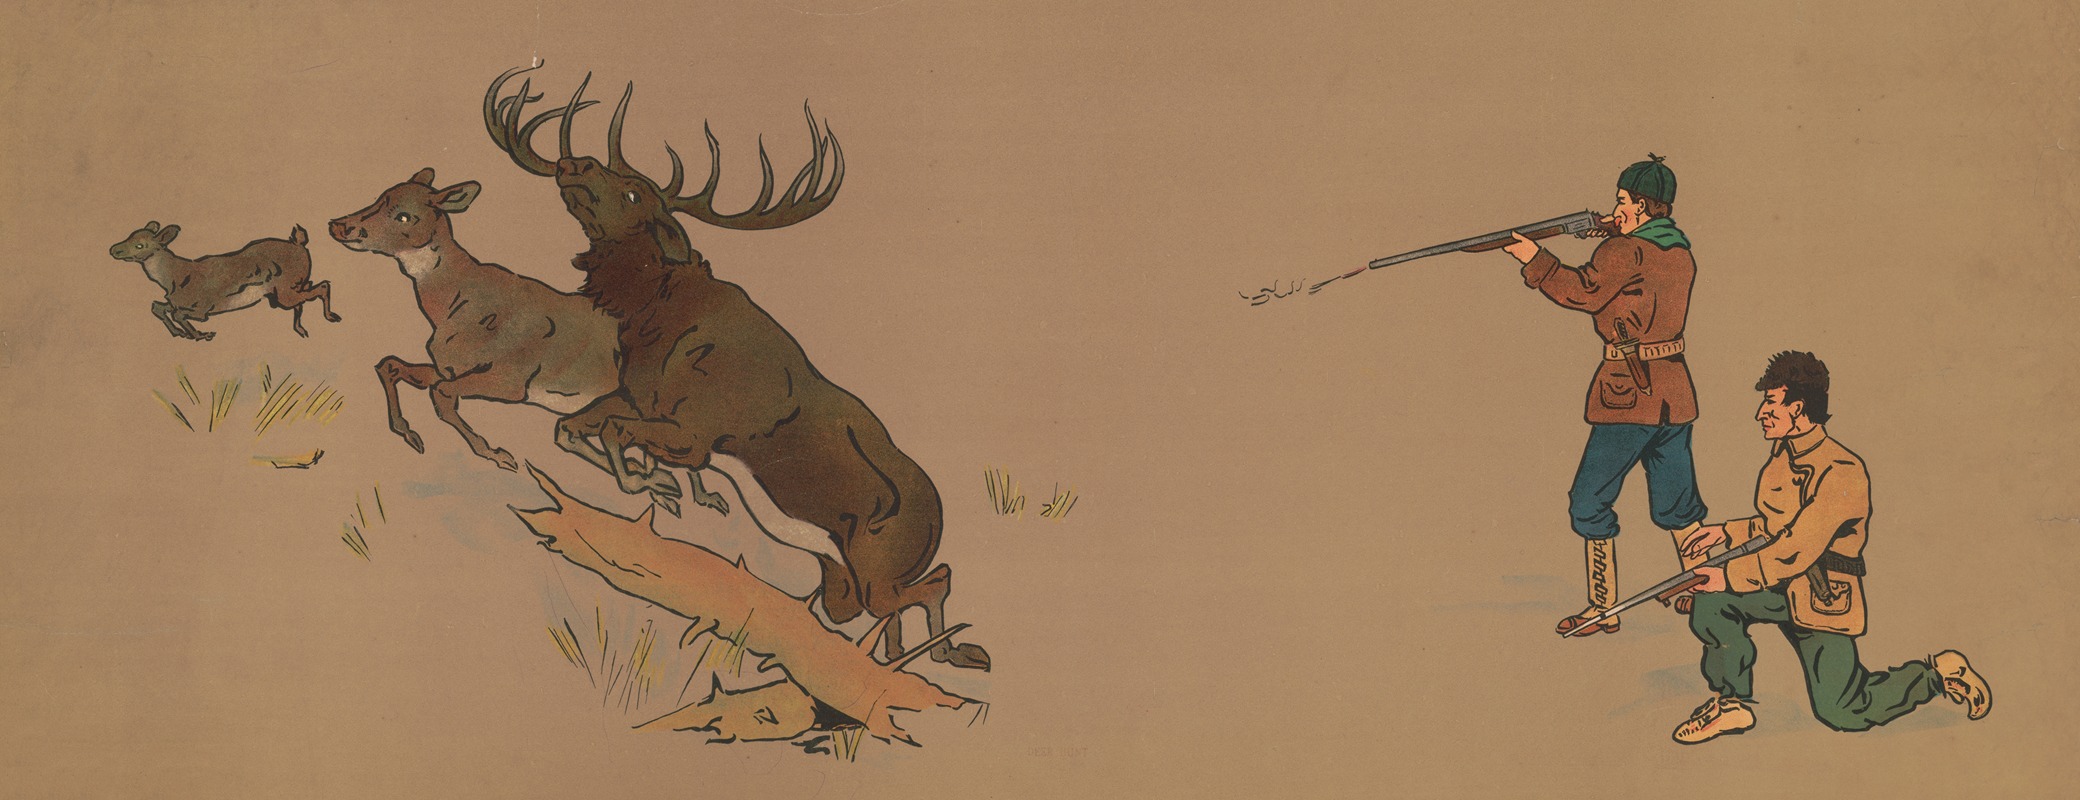 George Markendorff - Deer hunt